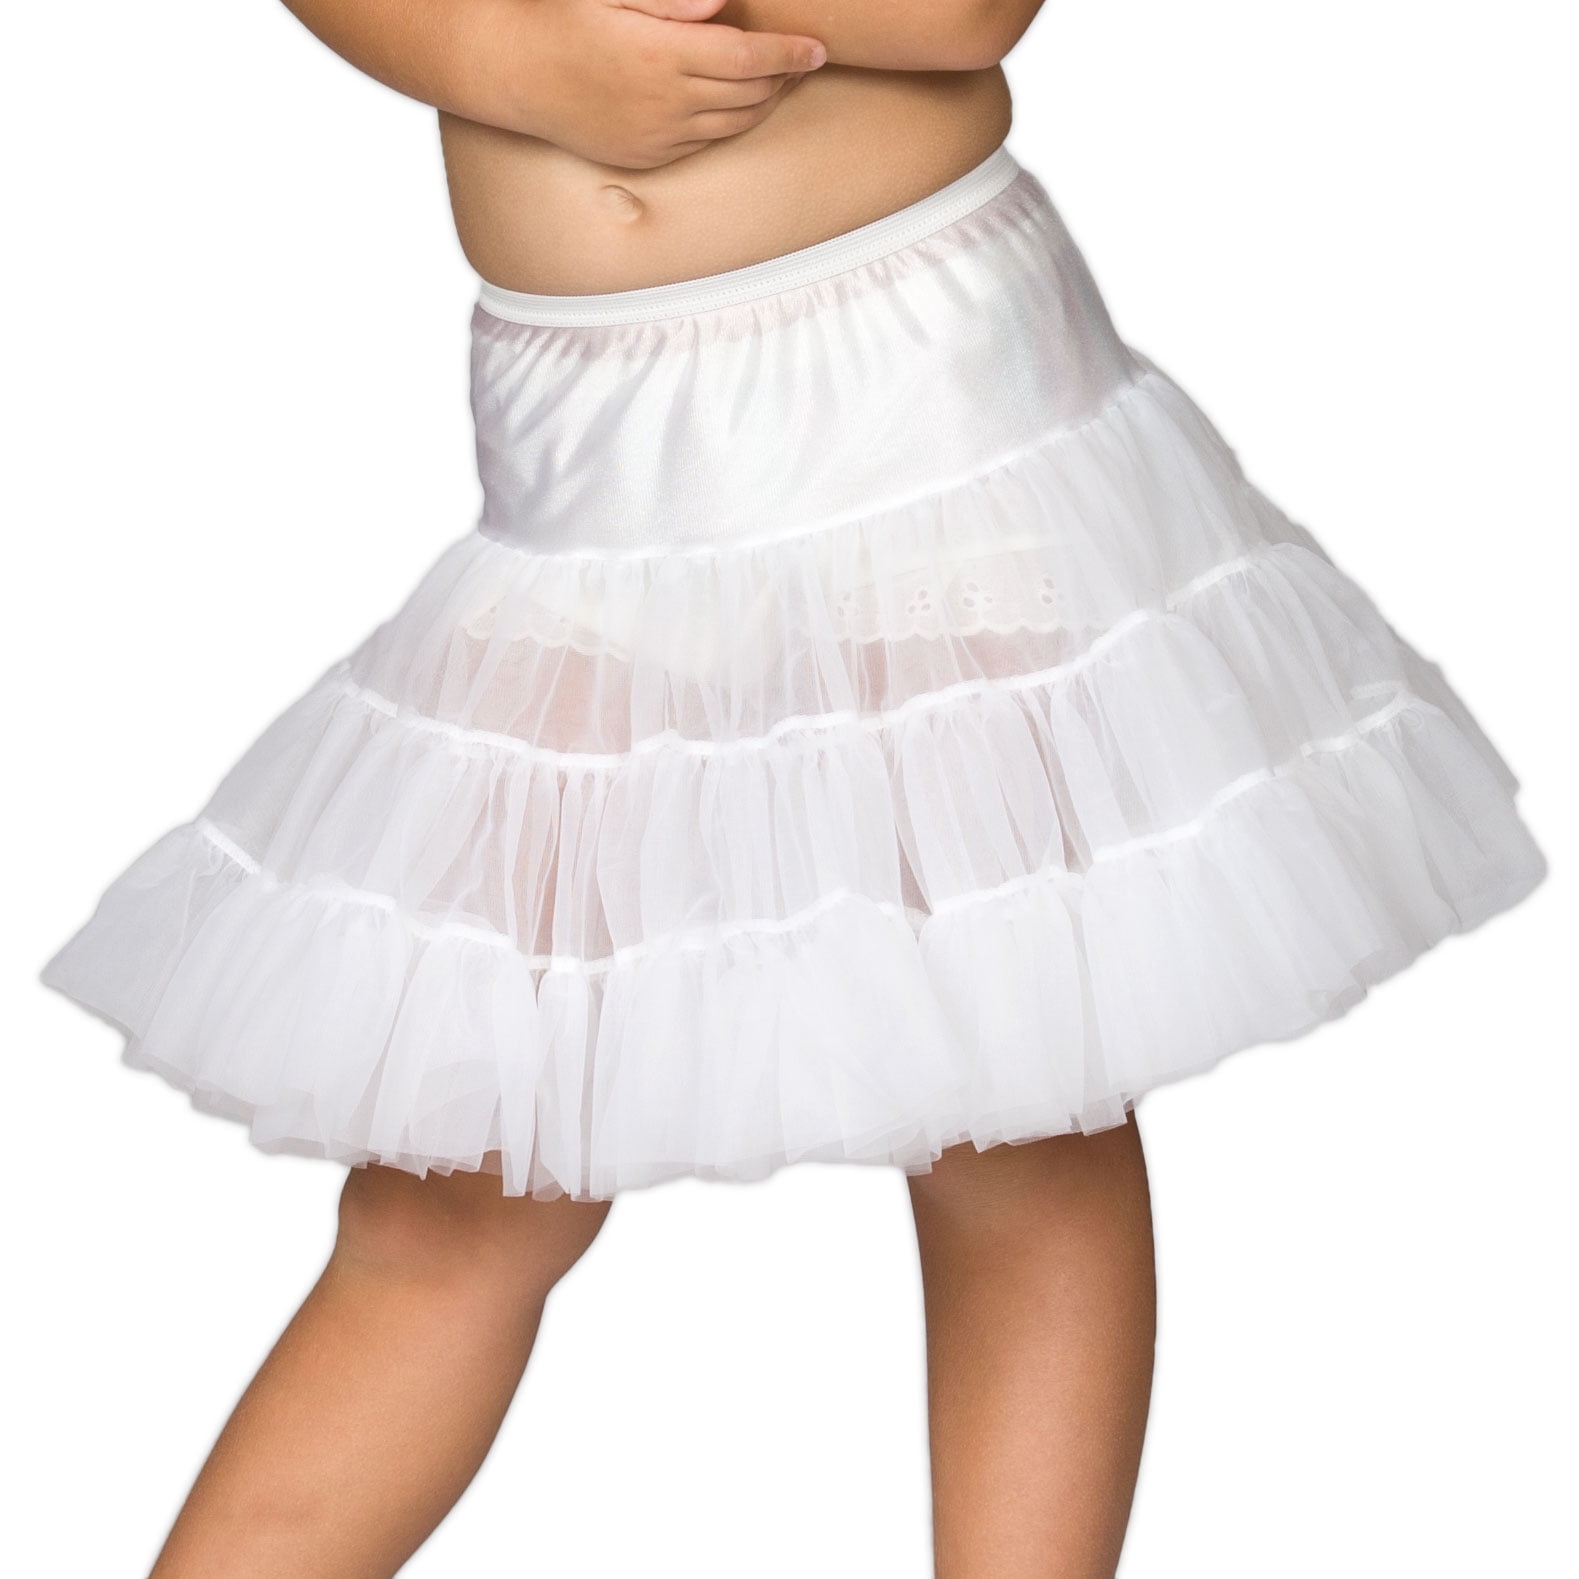 Eliffete Short Crinoline Half Slips for Under Dresses Petticoat Tutu Girls 